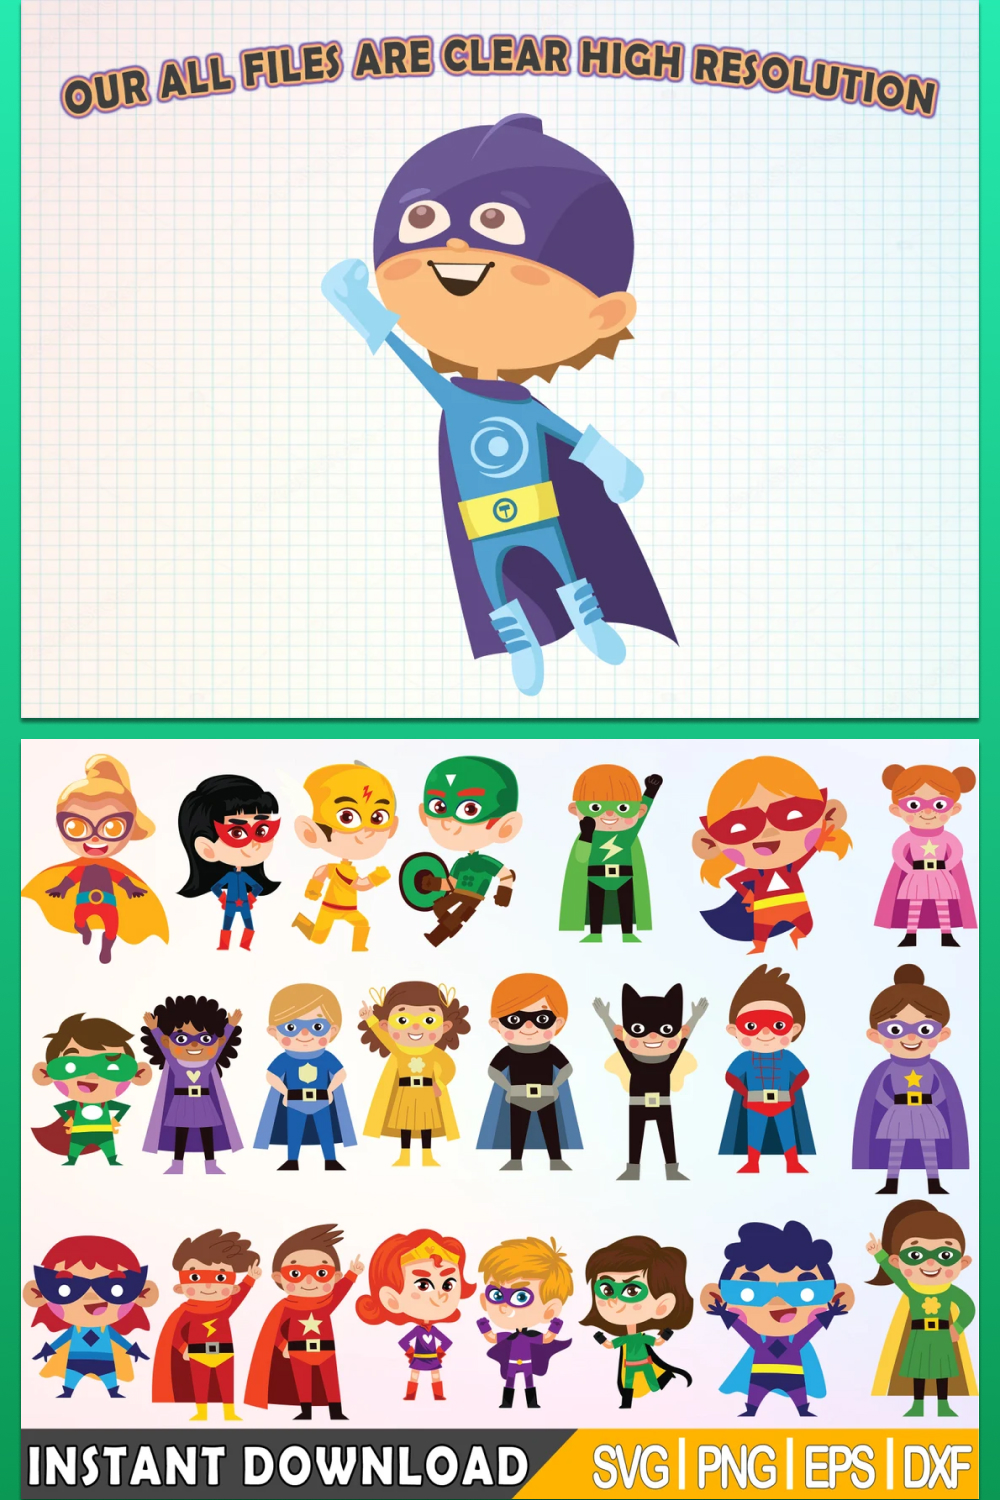 Images of various superheroes.